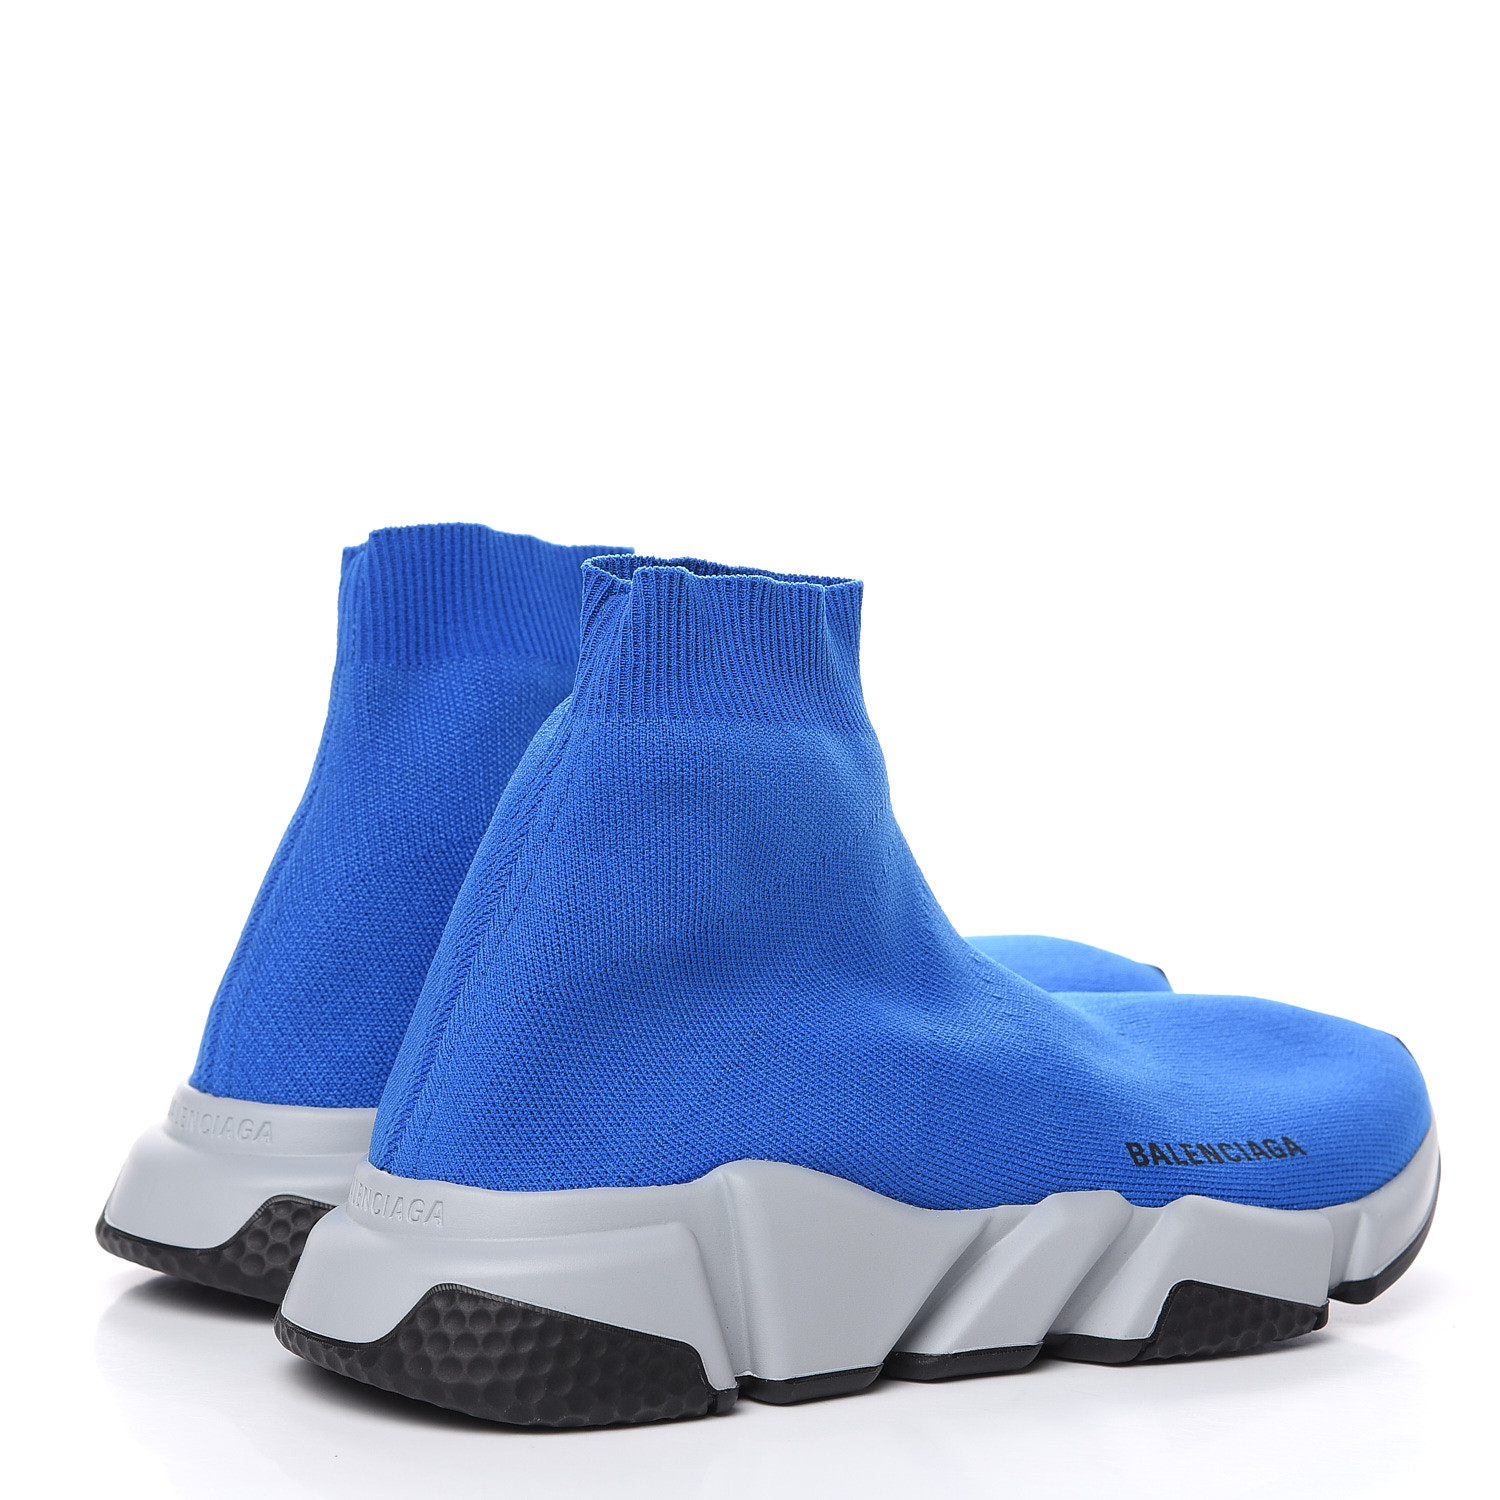 BALENCIAGA Neoprene Knit Speed Trainer Sneakers 7 Blue 484424